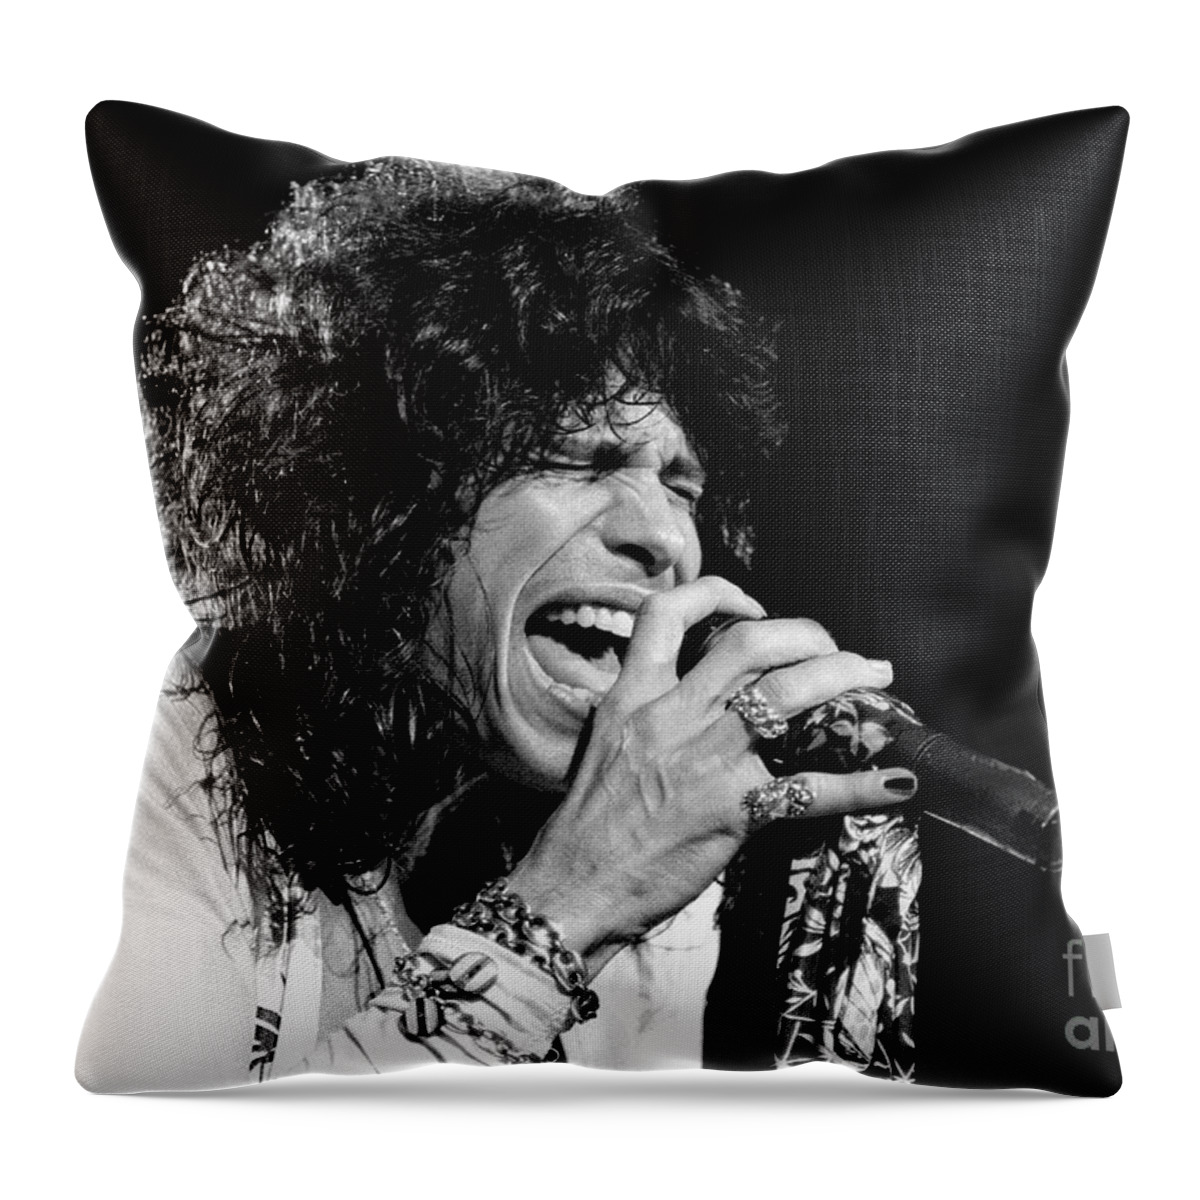 Singing Throw Pillow featuring the photograph Steven Tyler - Aerosmith #10 by Concert Photos